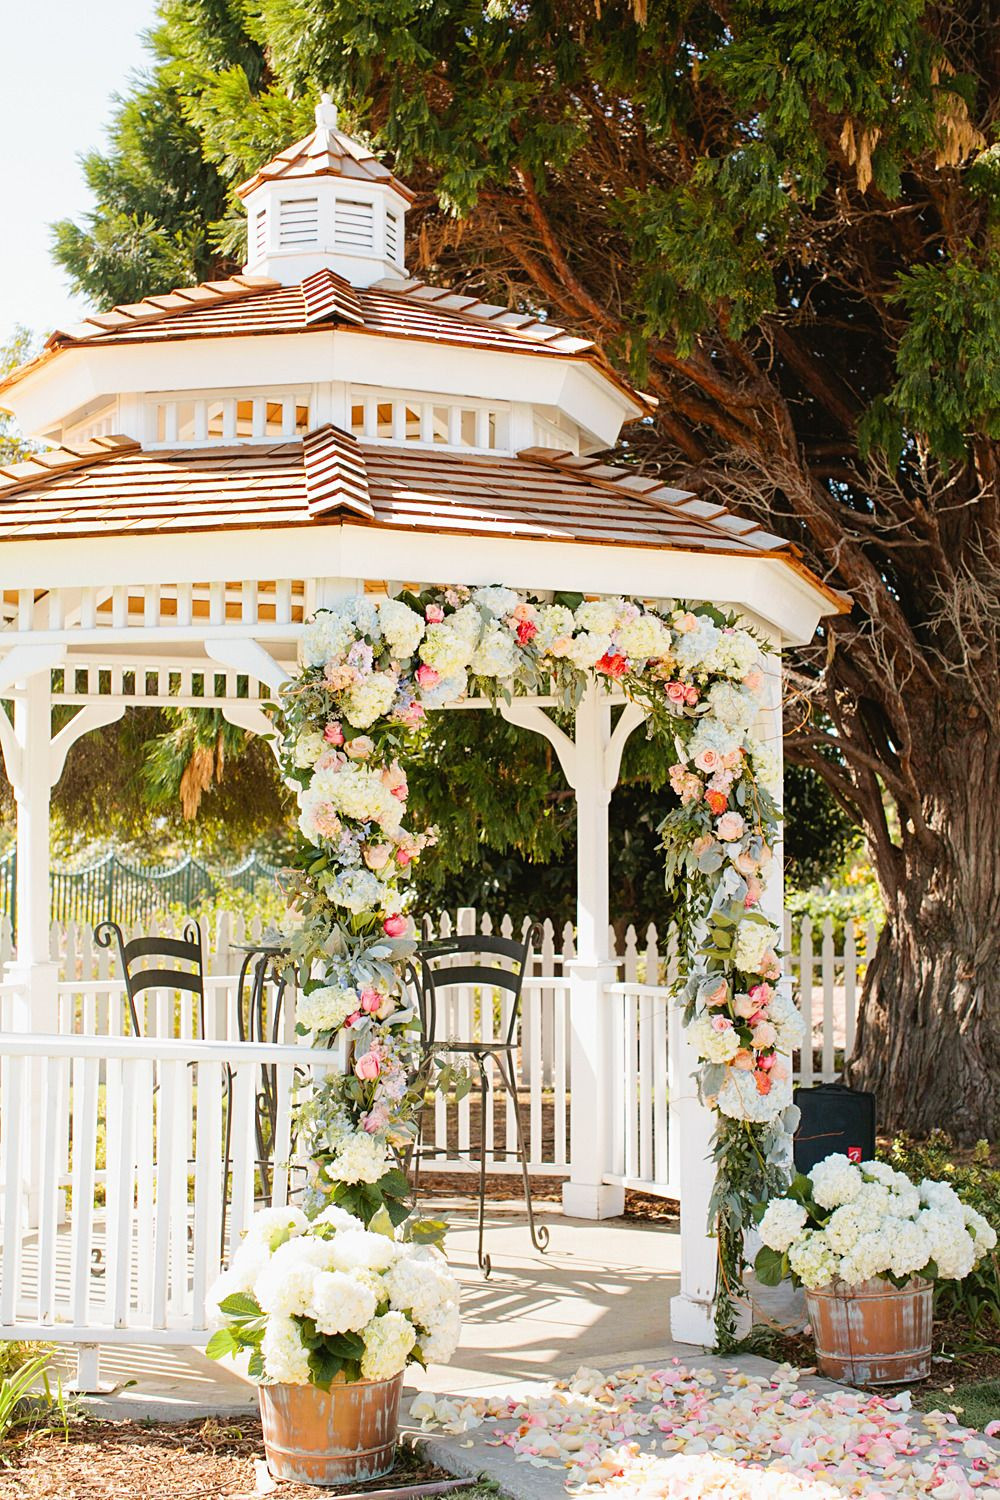 How To Decorate A Gazebo For A Wedding
 Whimsical Woodland Garden Wedding